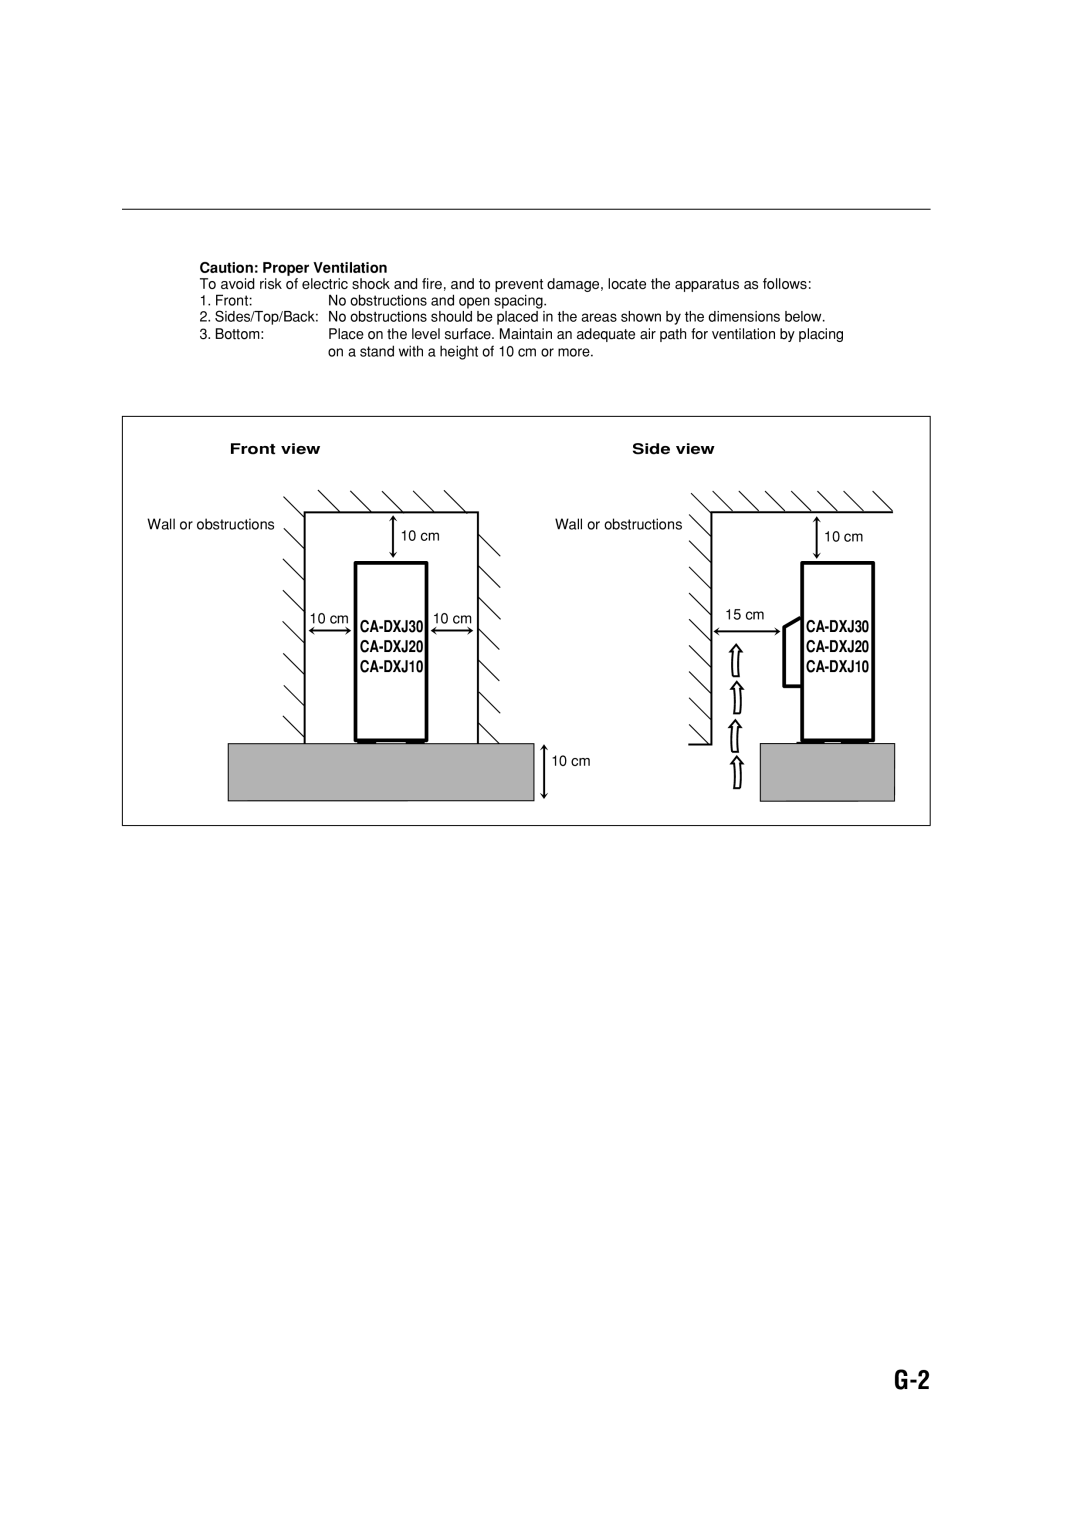 JVC CA-DXJ35 manual Caution: Proper Ventilation, Front view, Side view, CA-DXJ30, CA-DXJ20, CA-DXJ10, 10 cm, 15 cm 